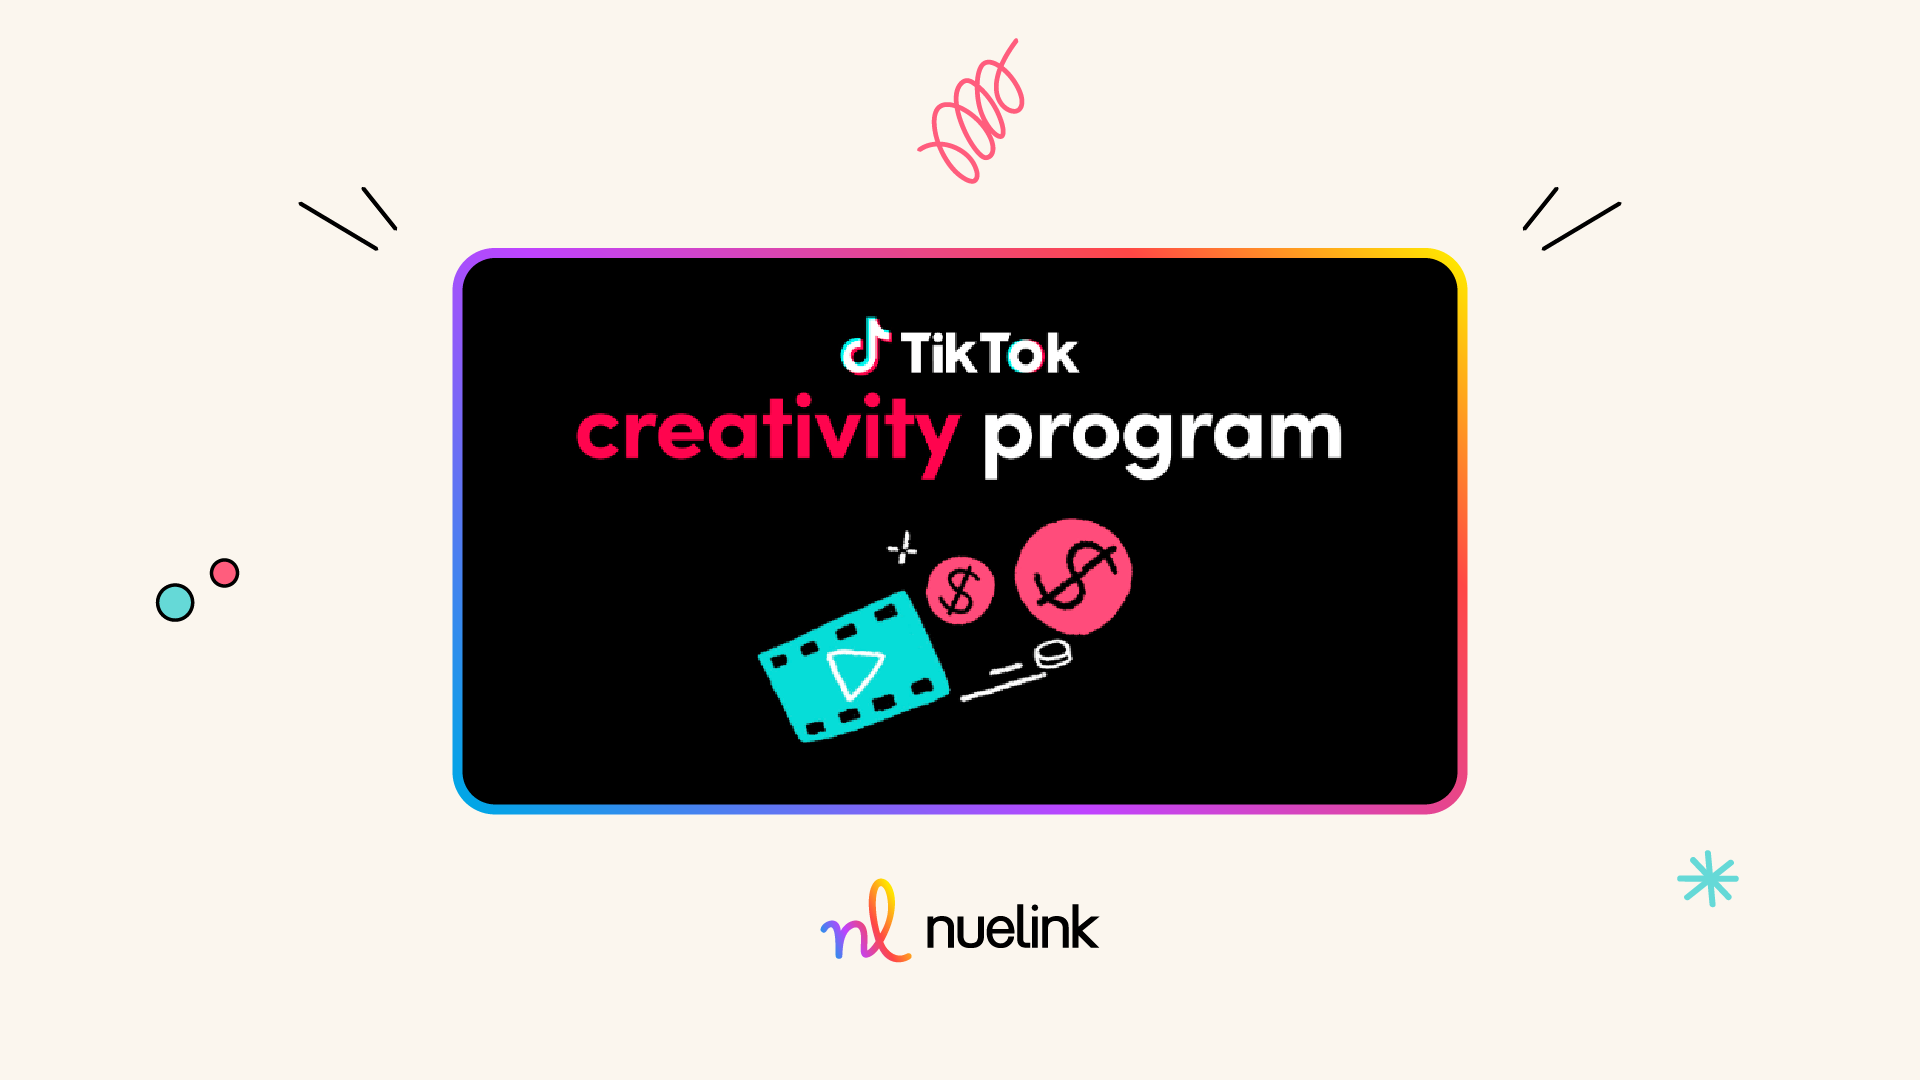 The TikTok Creativity Program